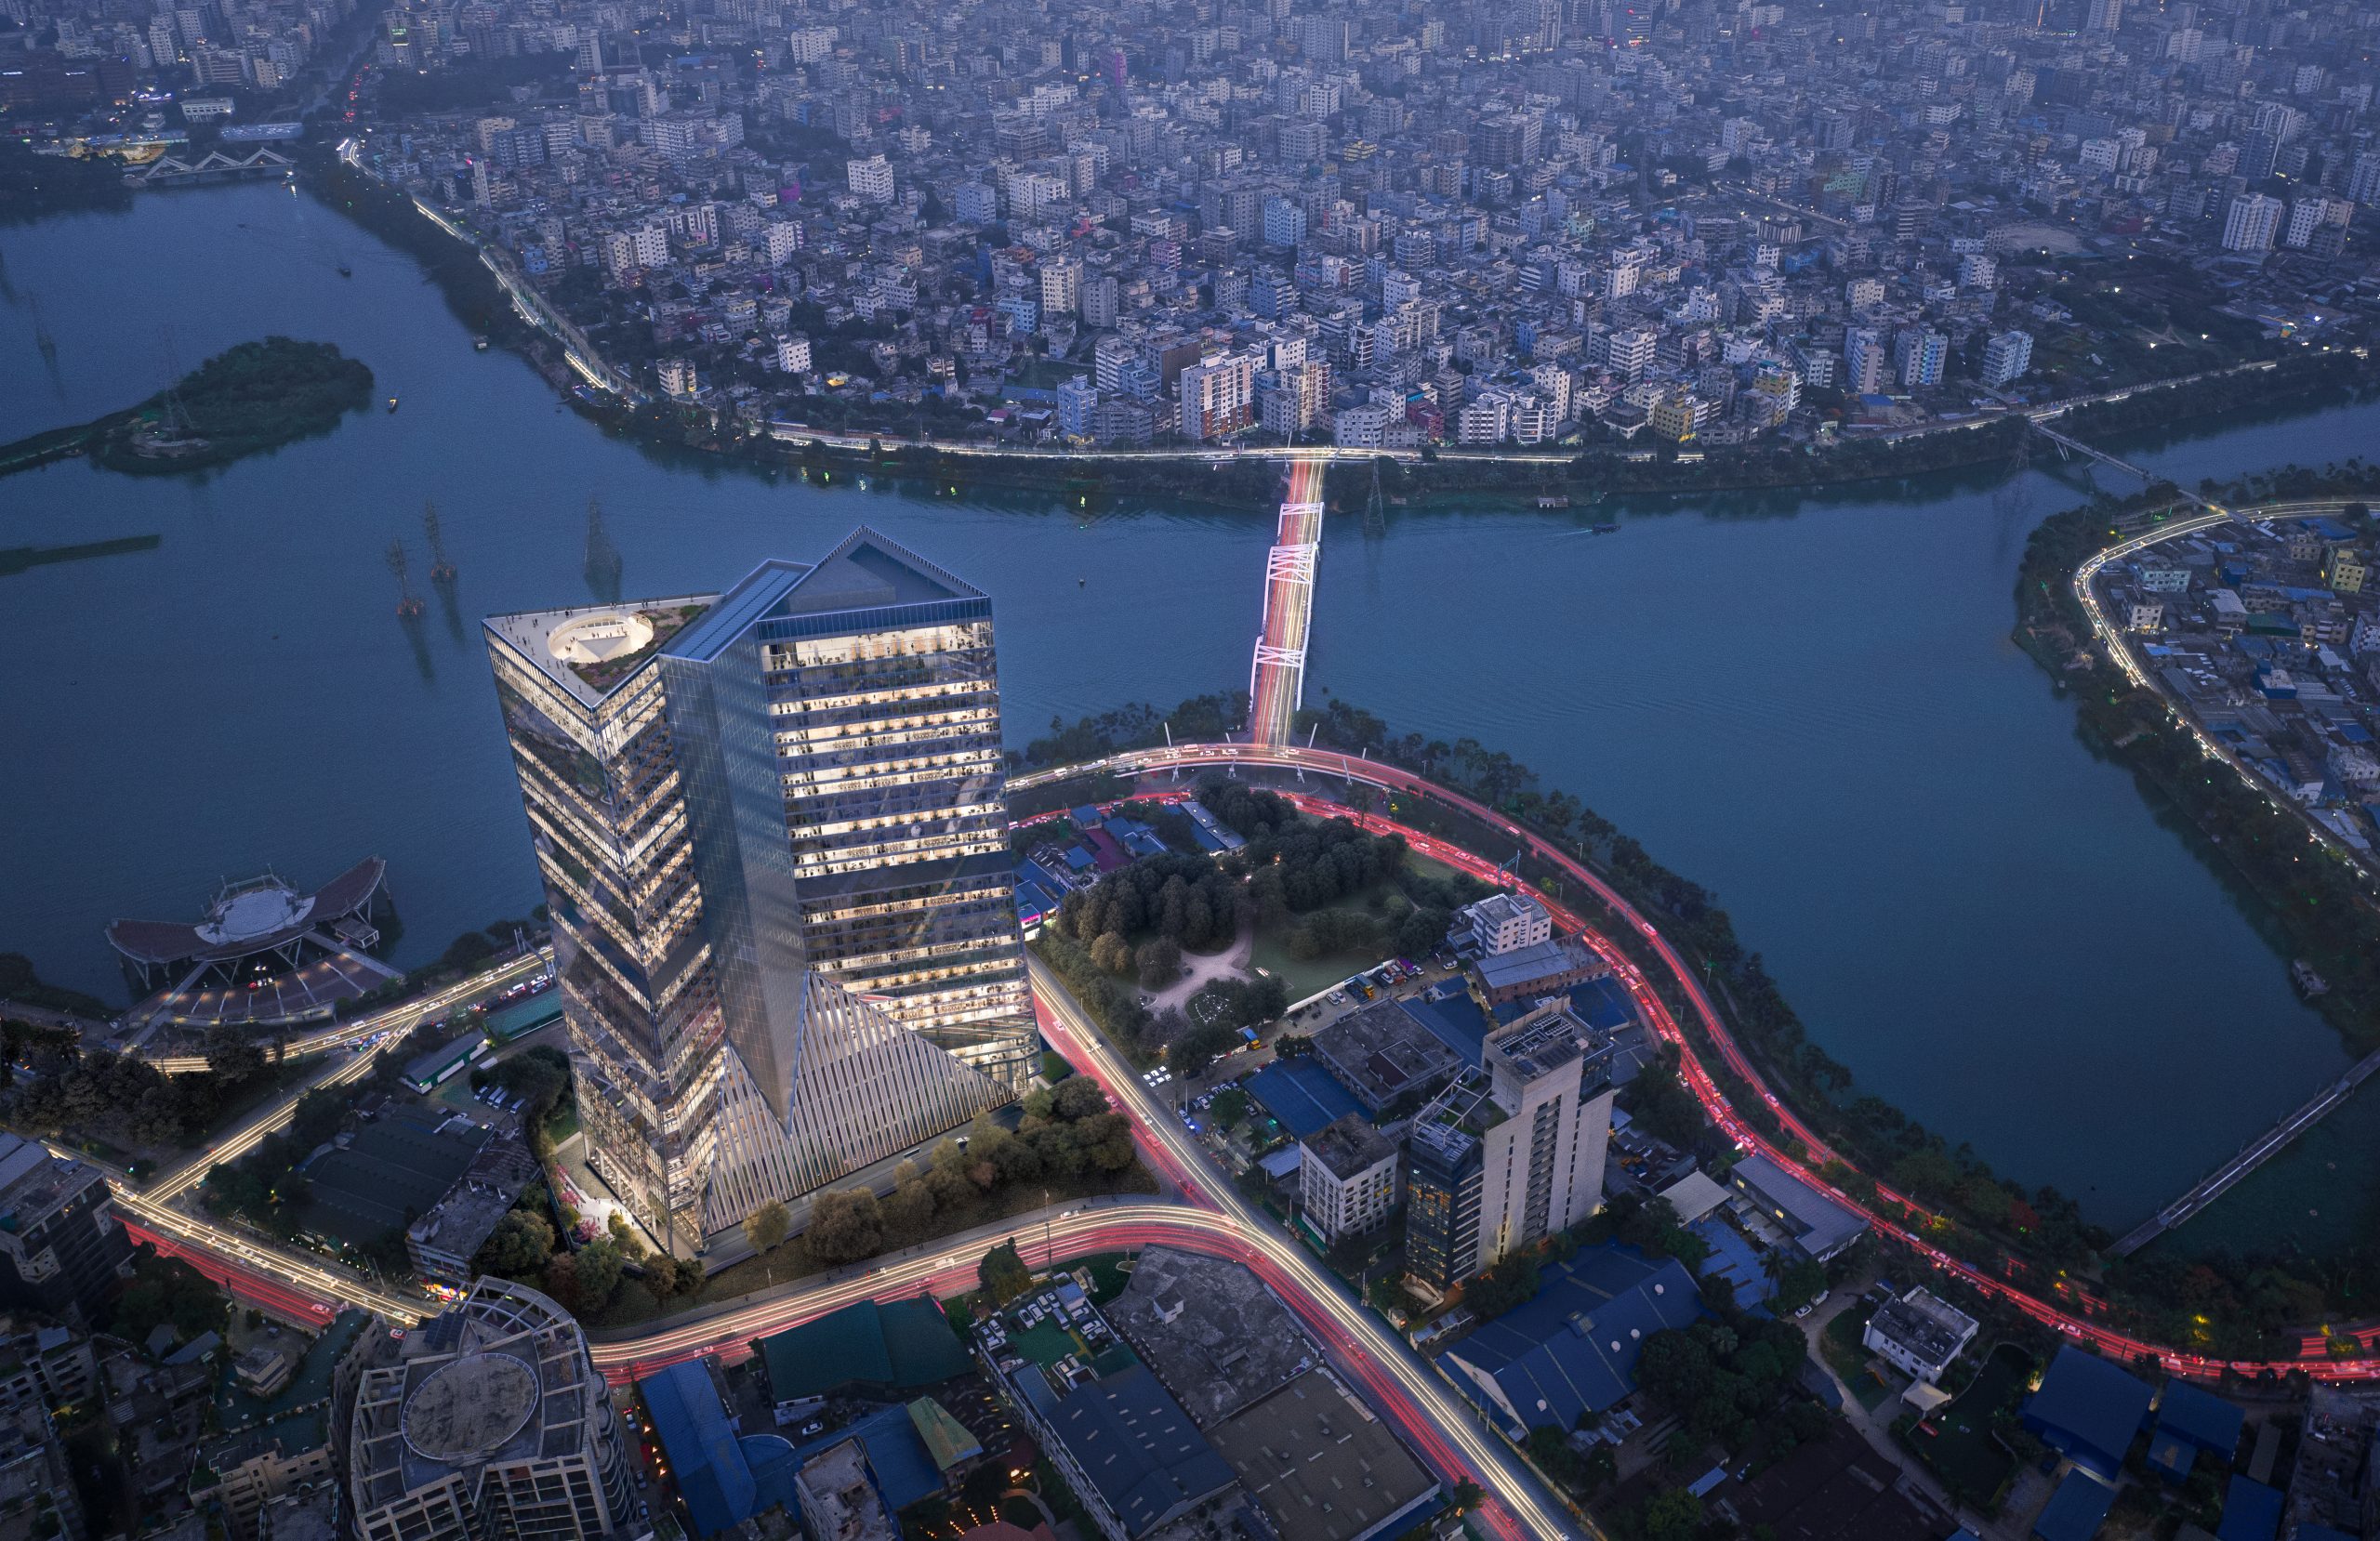 Shanta launches the city’s next iconic landmark “Dhaka Tower”